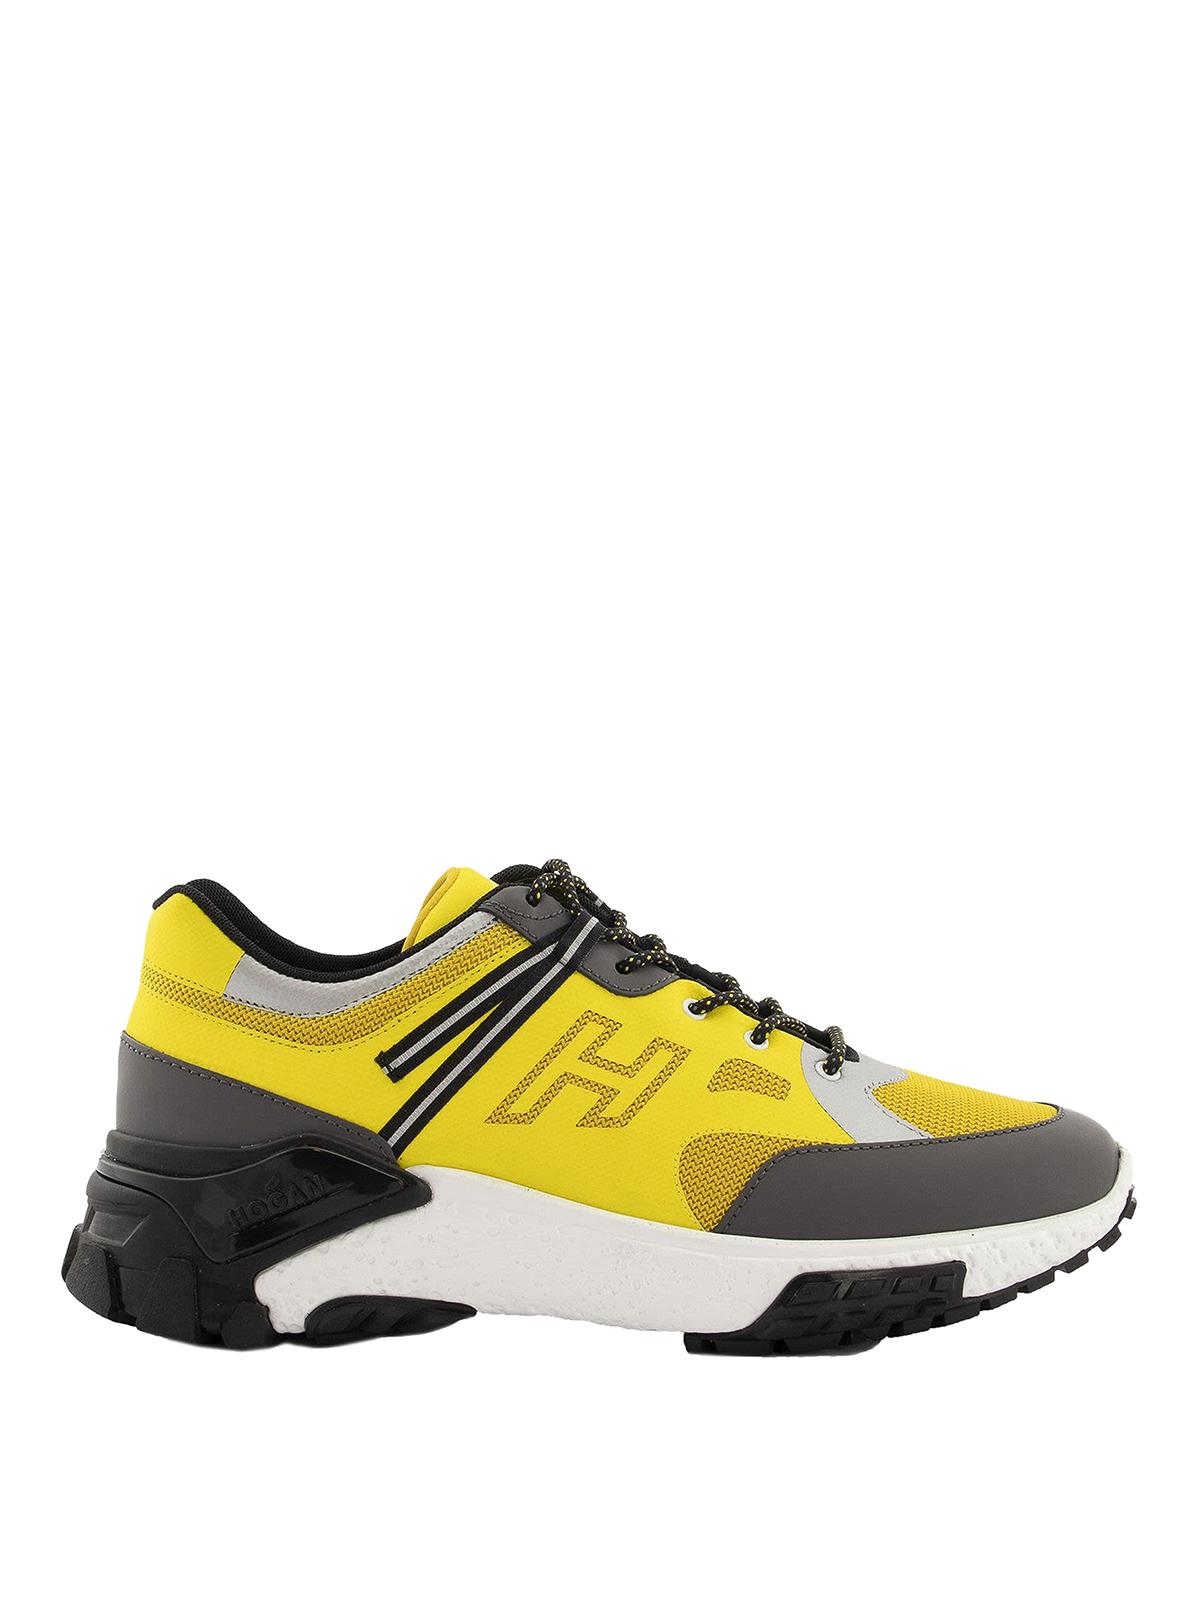 Hogan Leather H477 Urban Trek Sneakers in Yellow for Men - Lyst